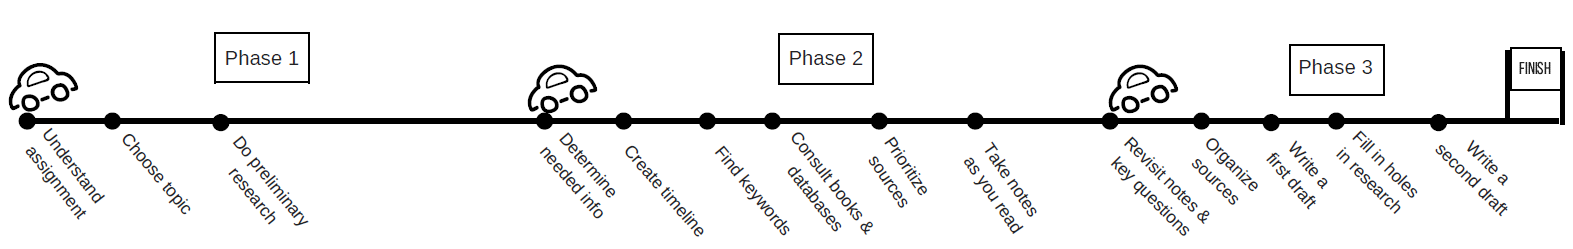 Timeline of process